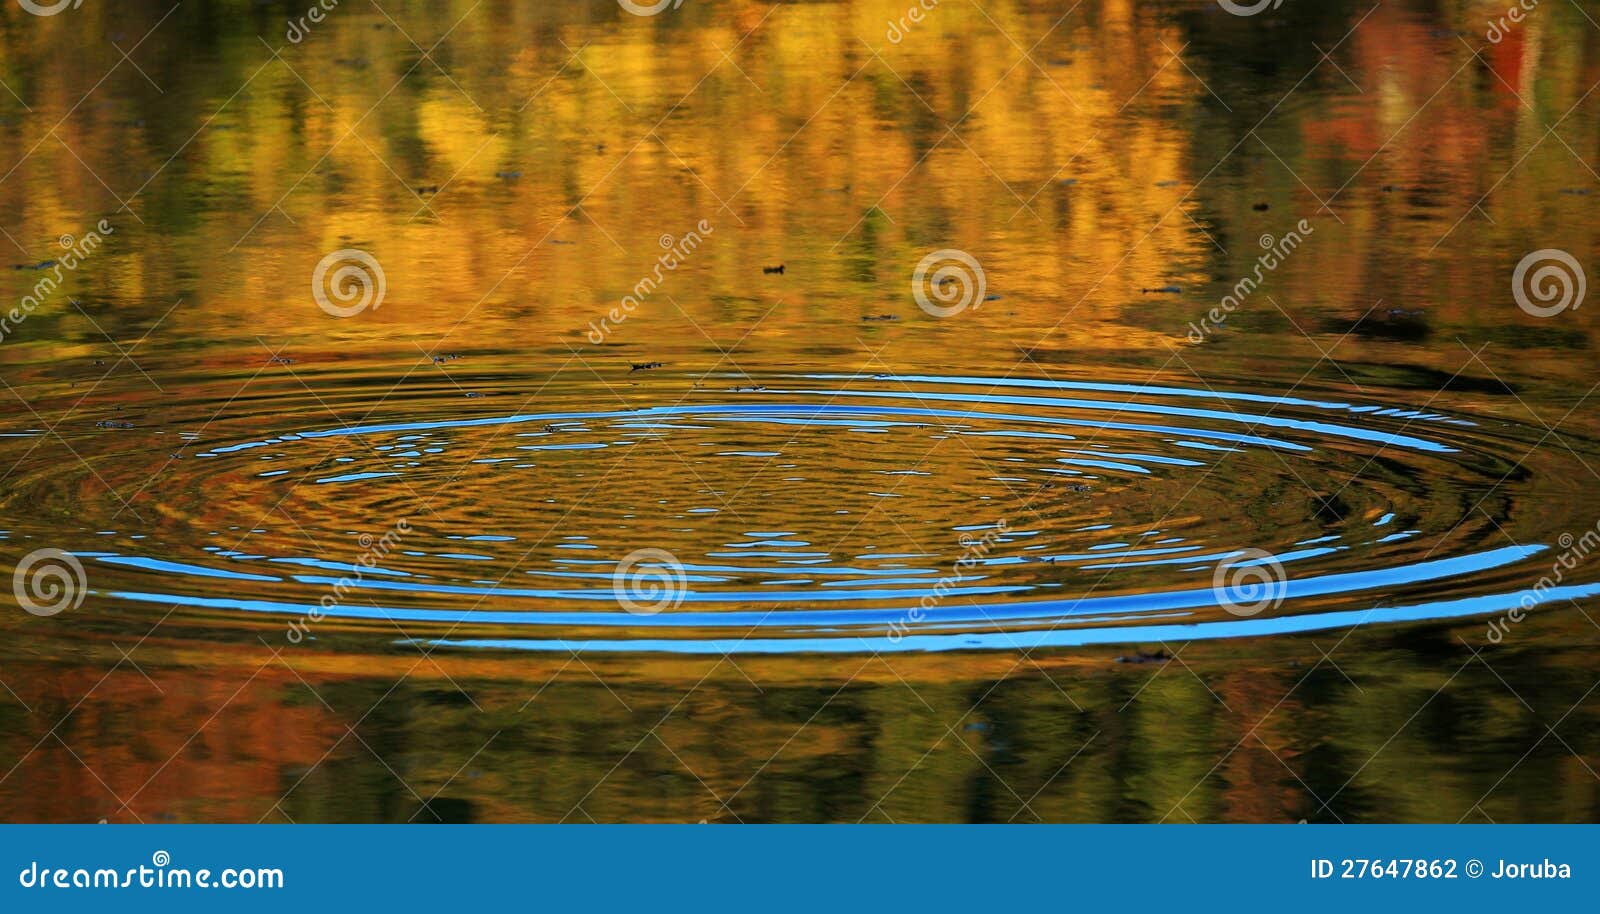 ripple on water surface